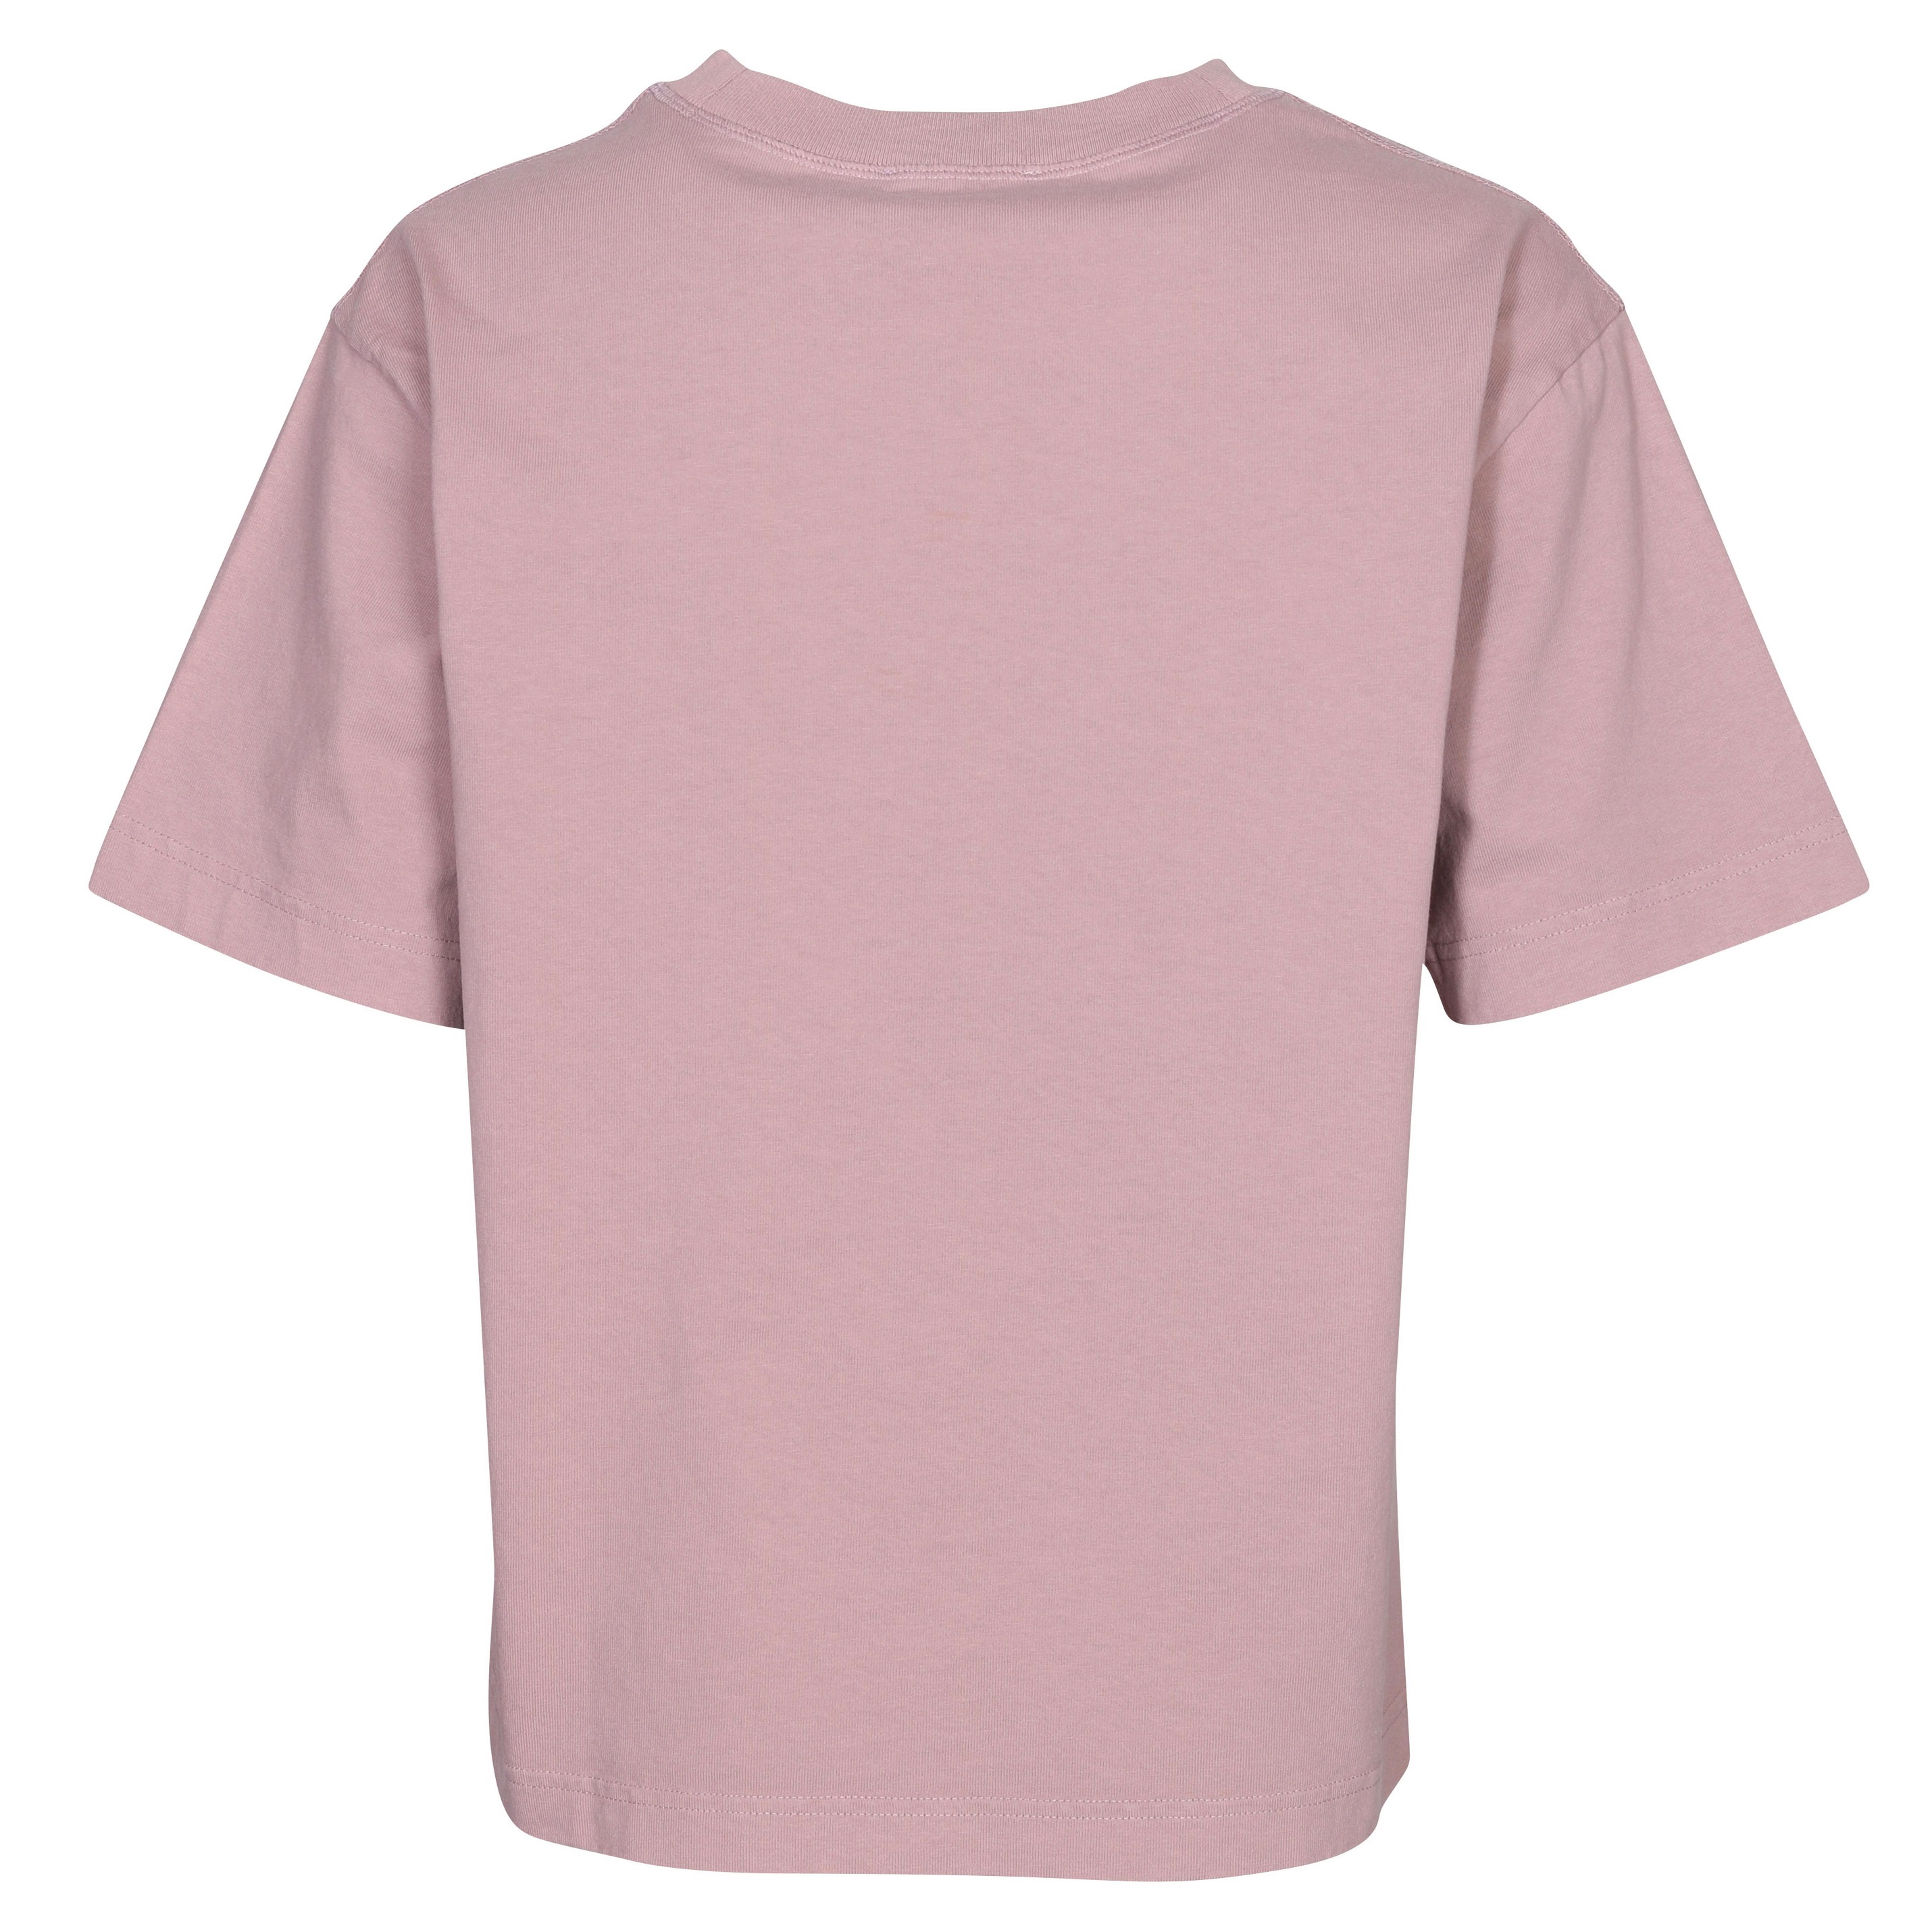 Acne Studios Stamp T-Shirt in Mauve Pink M